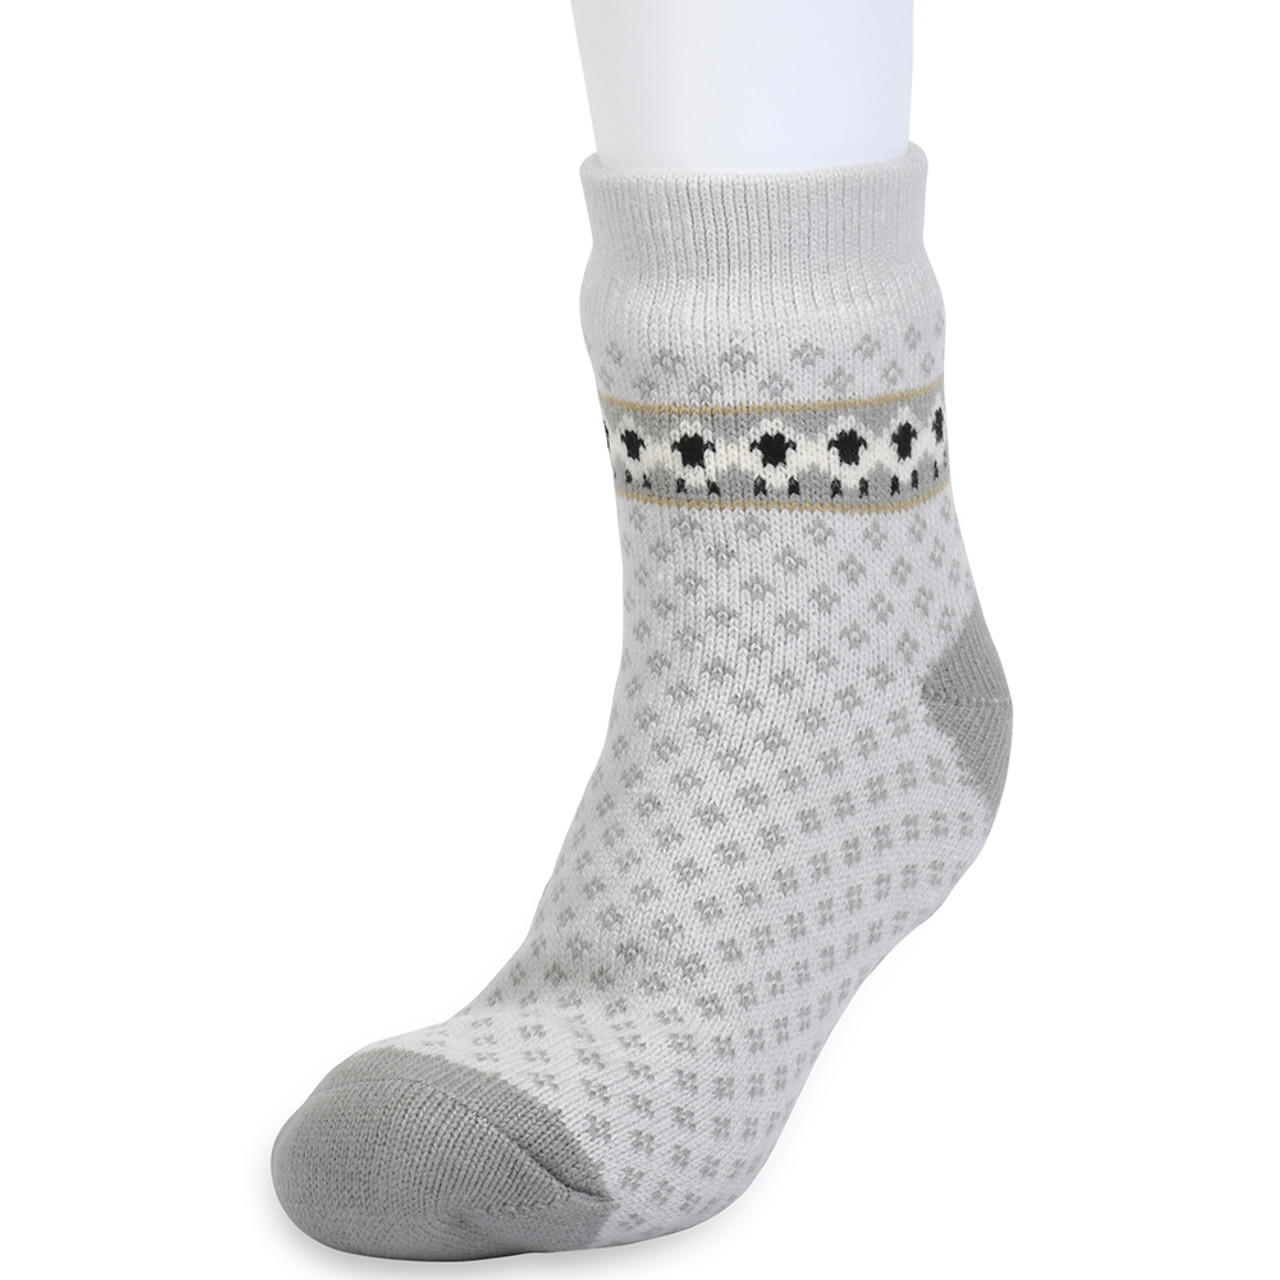 GaaHuu Women's Ankle Cabin Socks product image